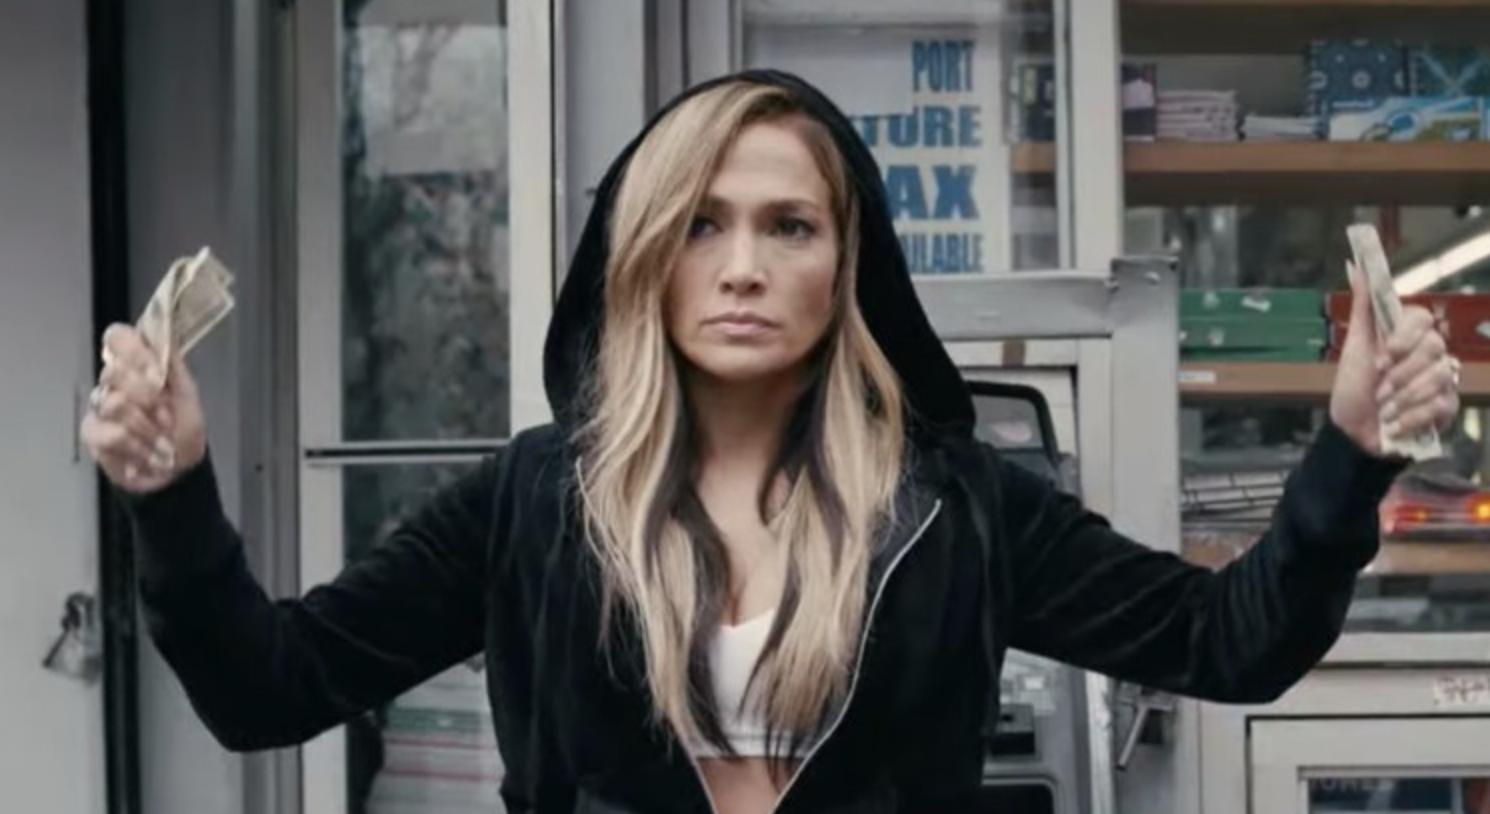 Still of Jennifer Lopez from the movie "Hustlers"